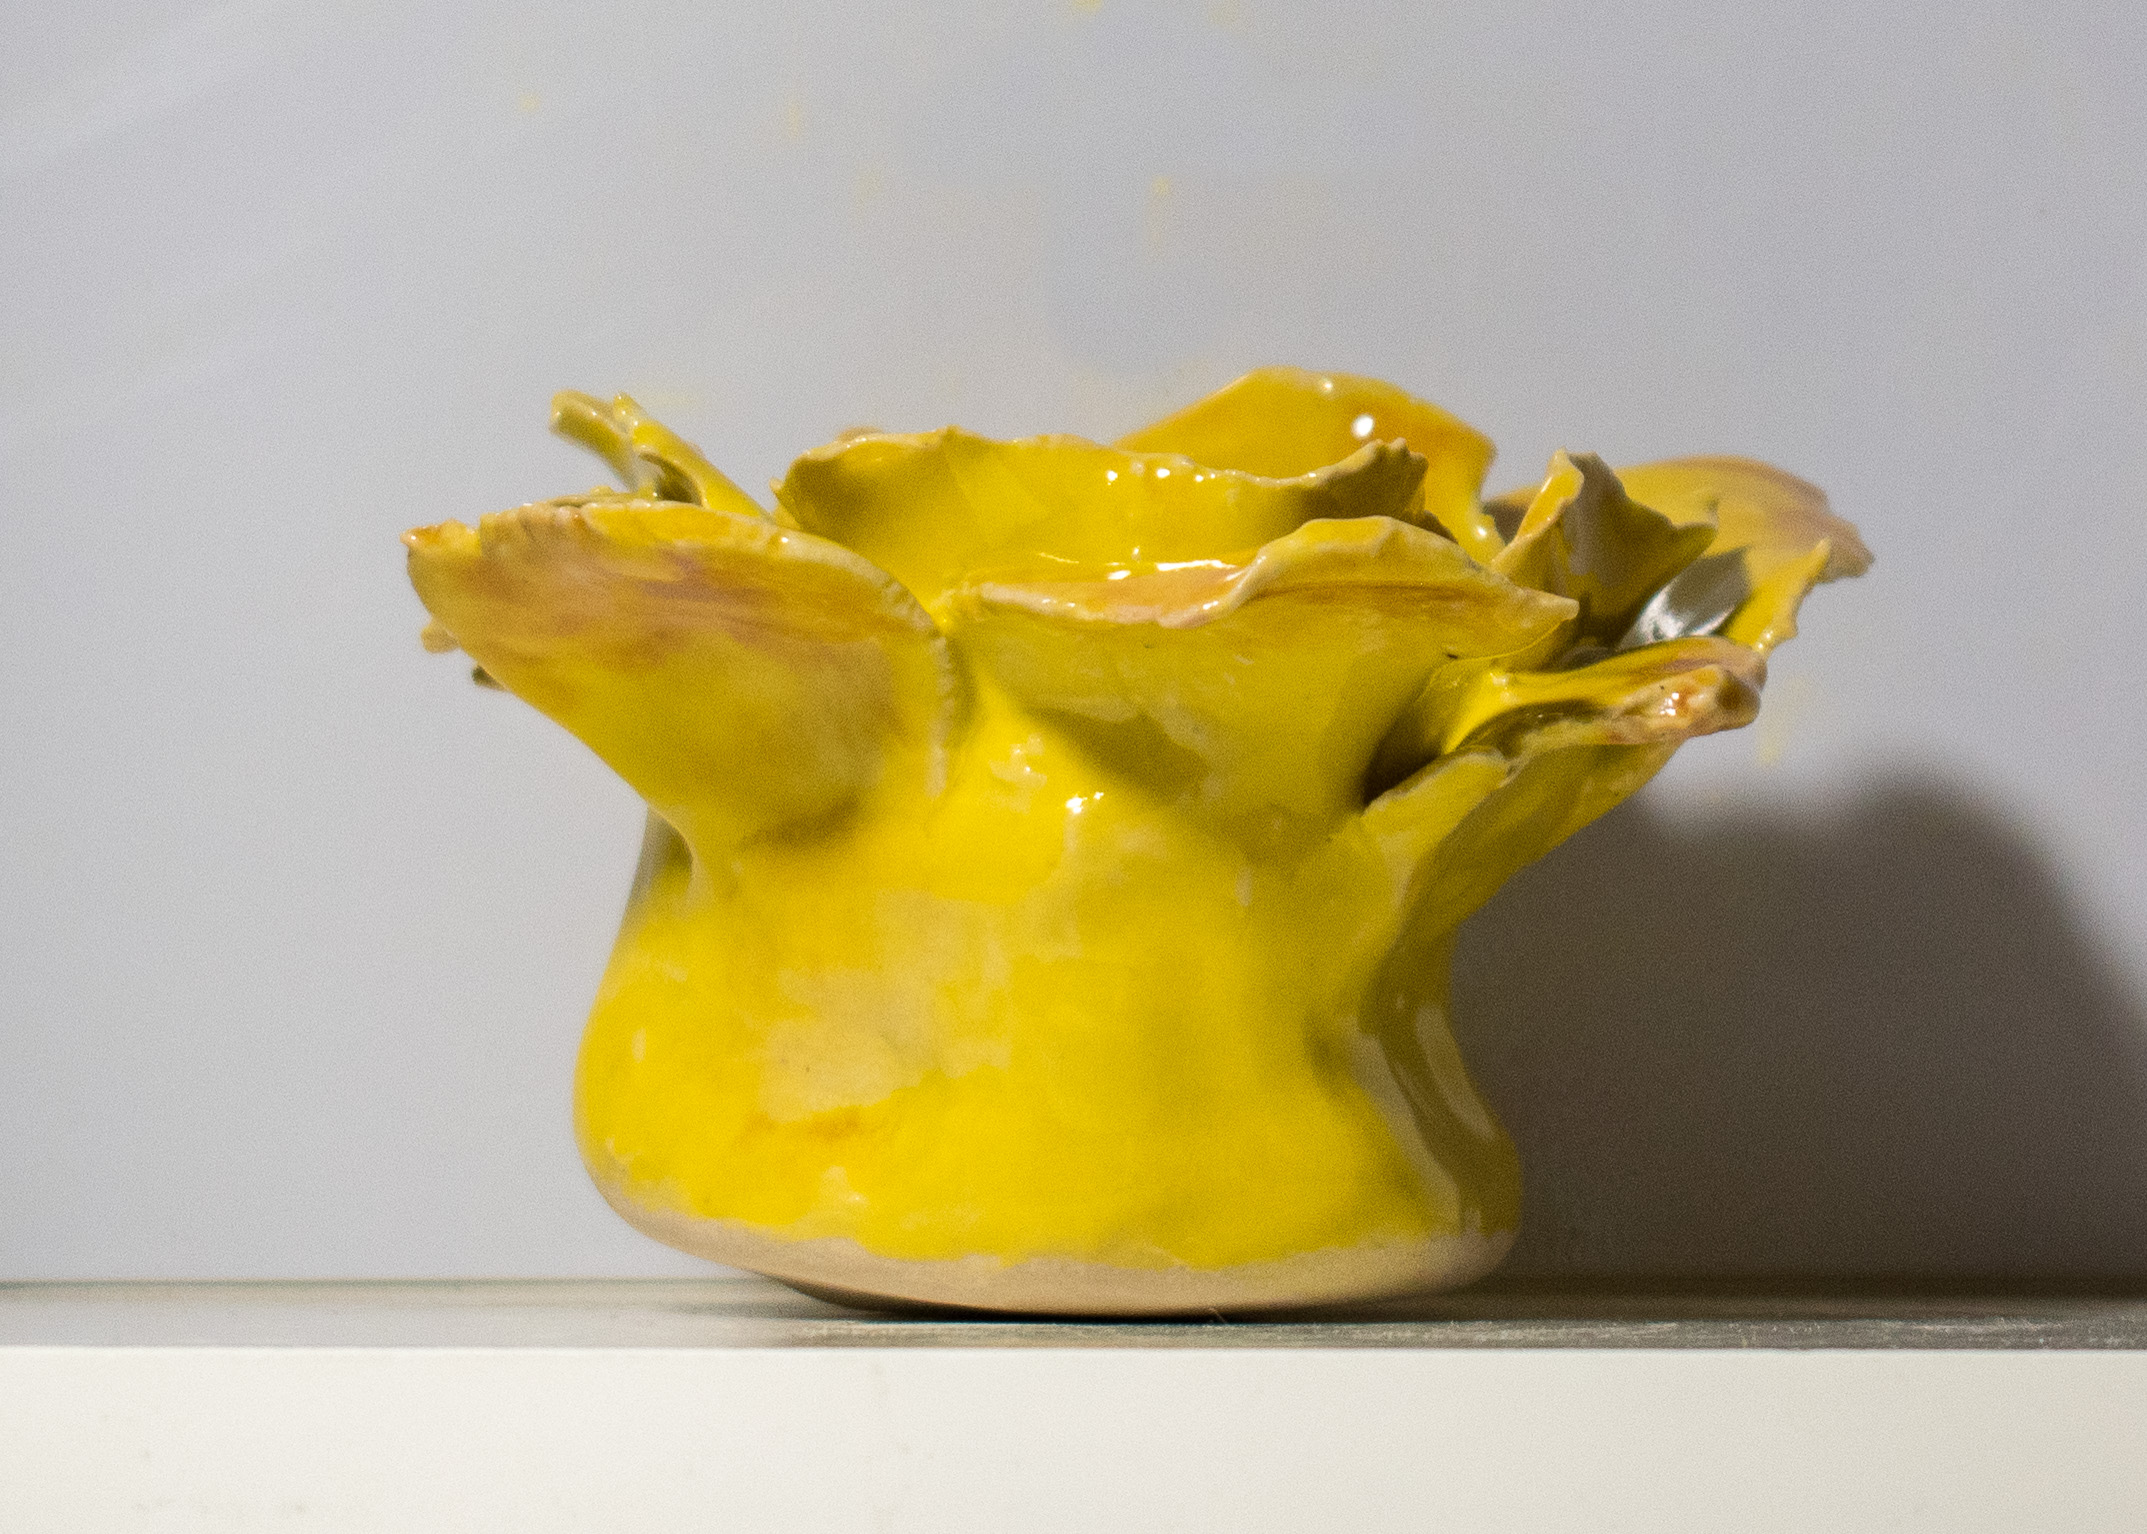 Blushing Yellow Rose by Neena Plant Pottery